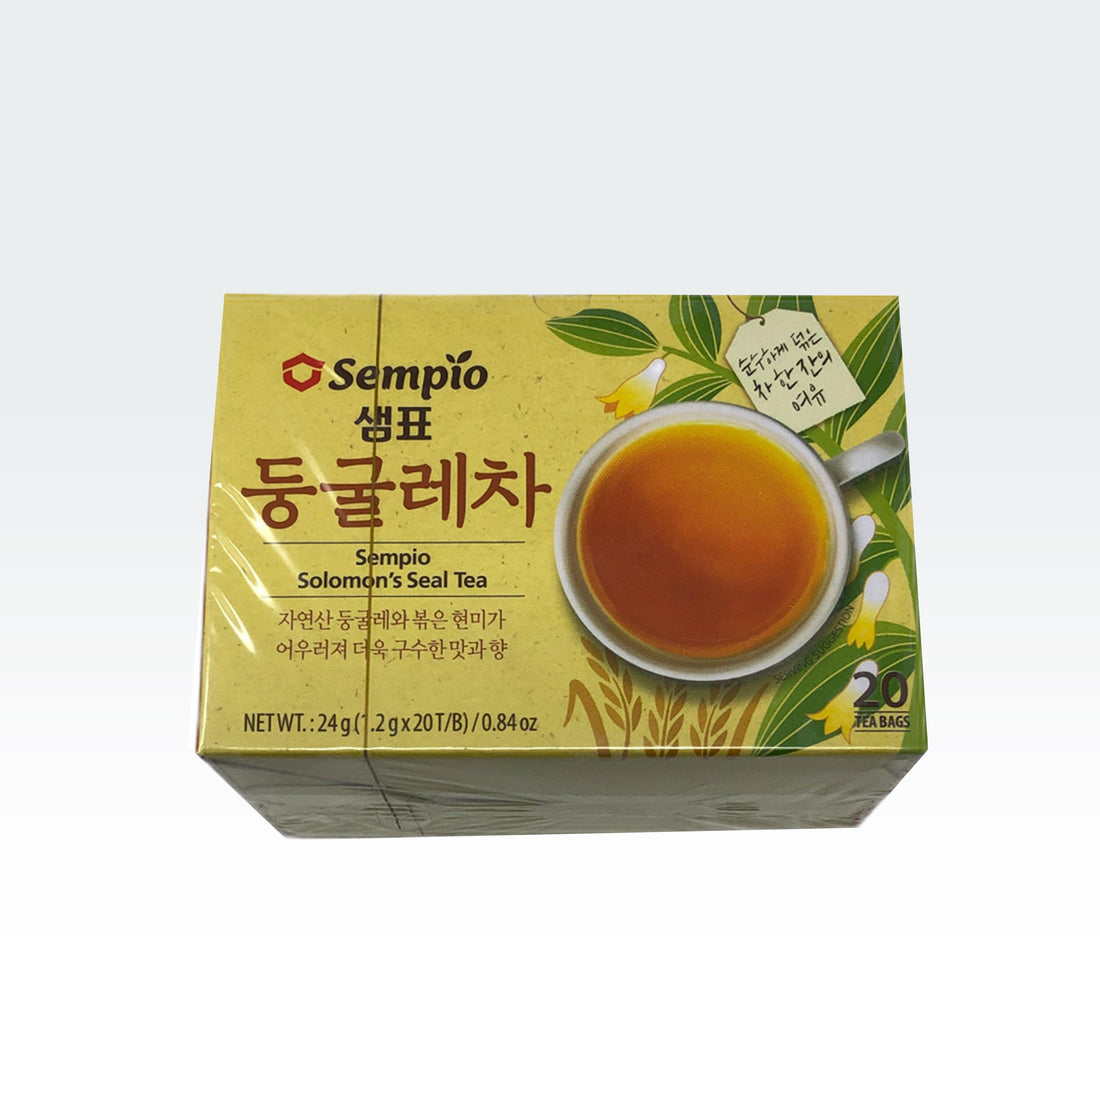 Sempio Solomon's Seal Tea (24 g.) - Anytime Basket